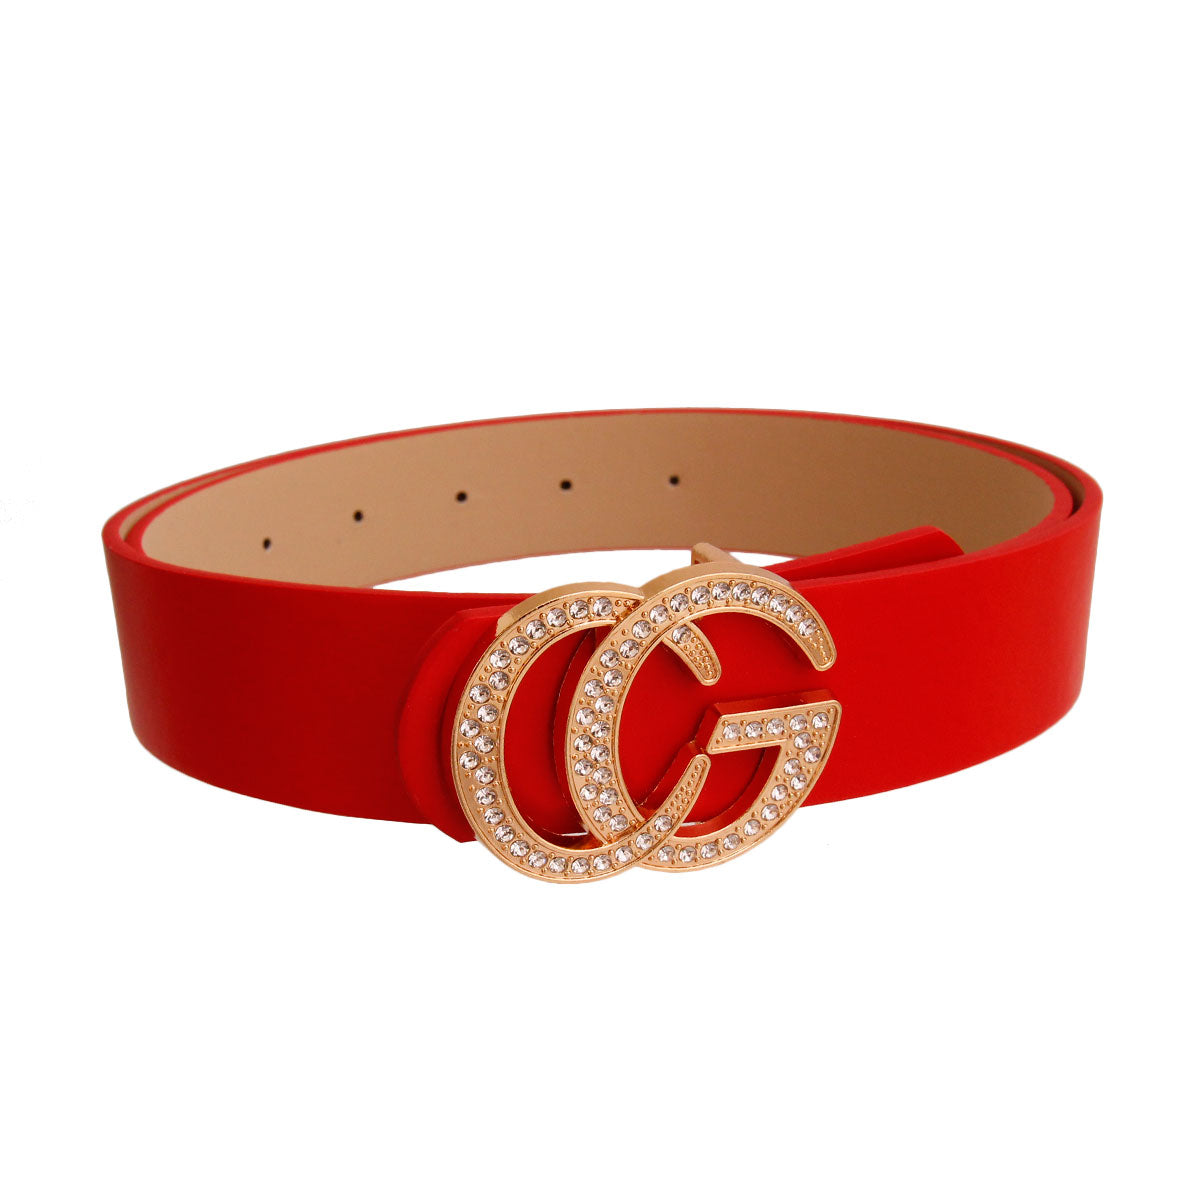 Red and Rhinestone Gold CG Belt